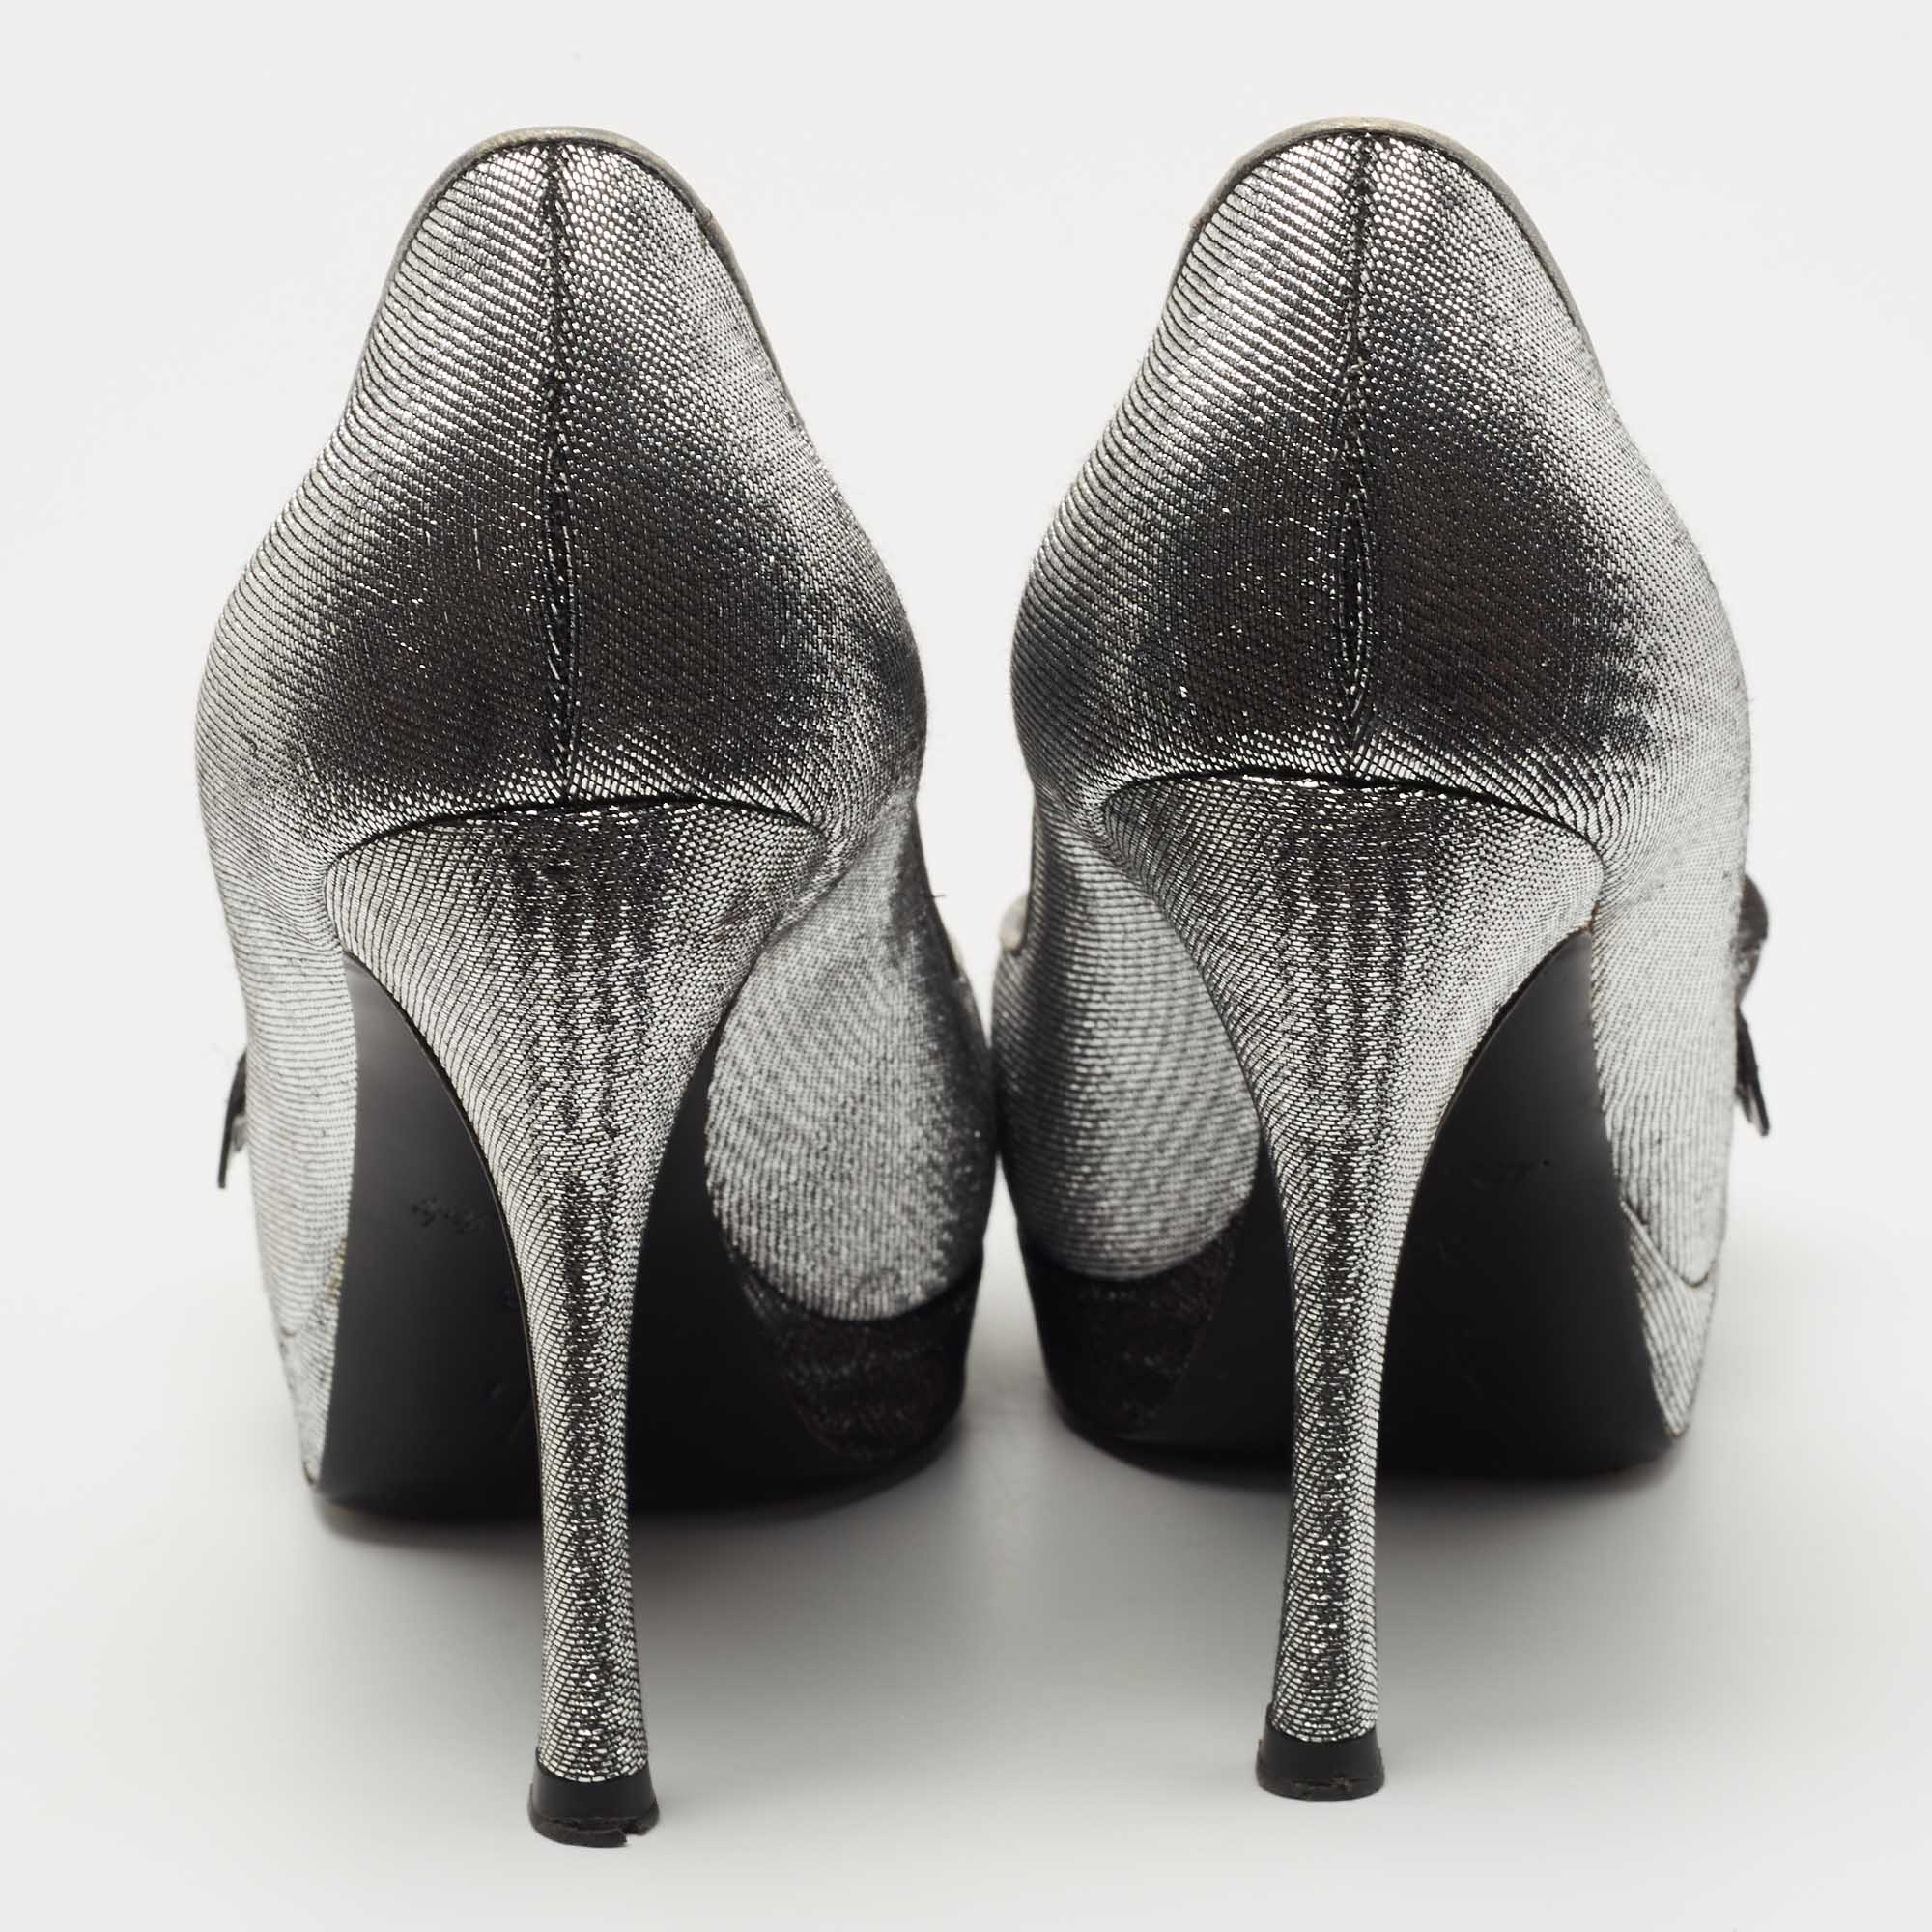 Louis Vuitton Metallic Grey/Black Lurex Fabric Floral Peep Toe Pumps Size 38